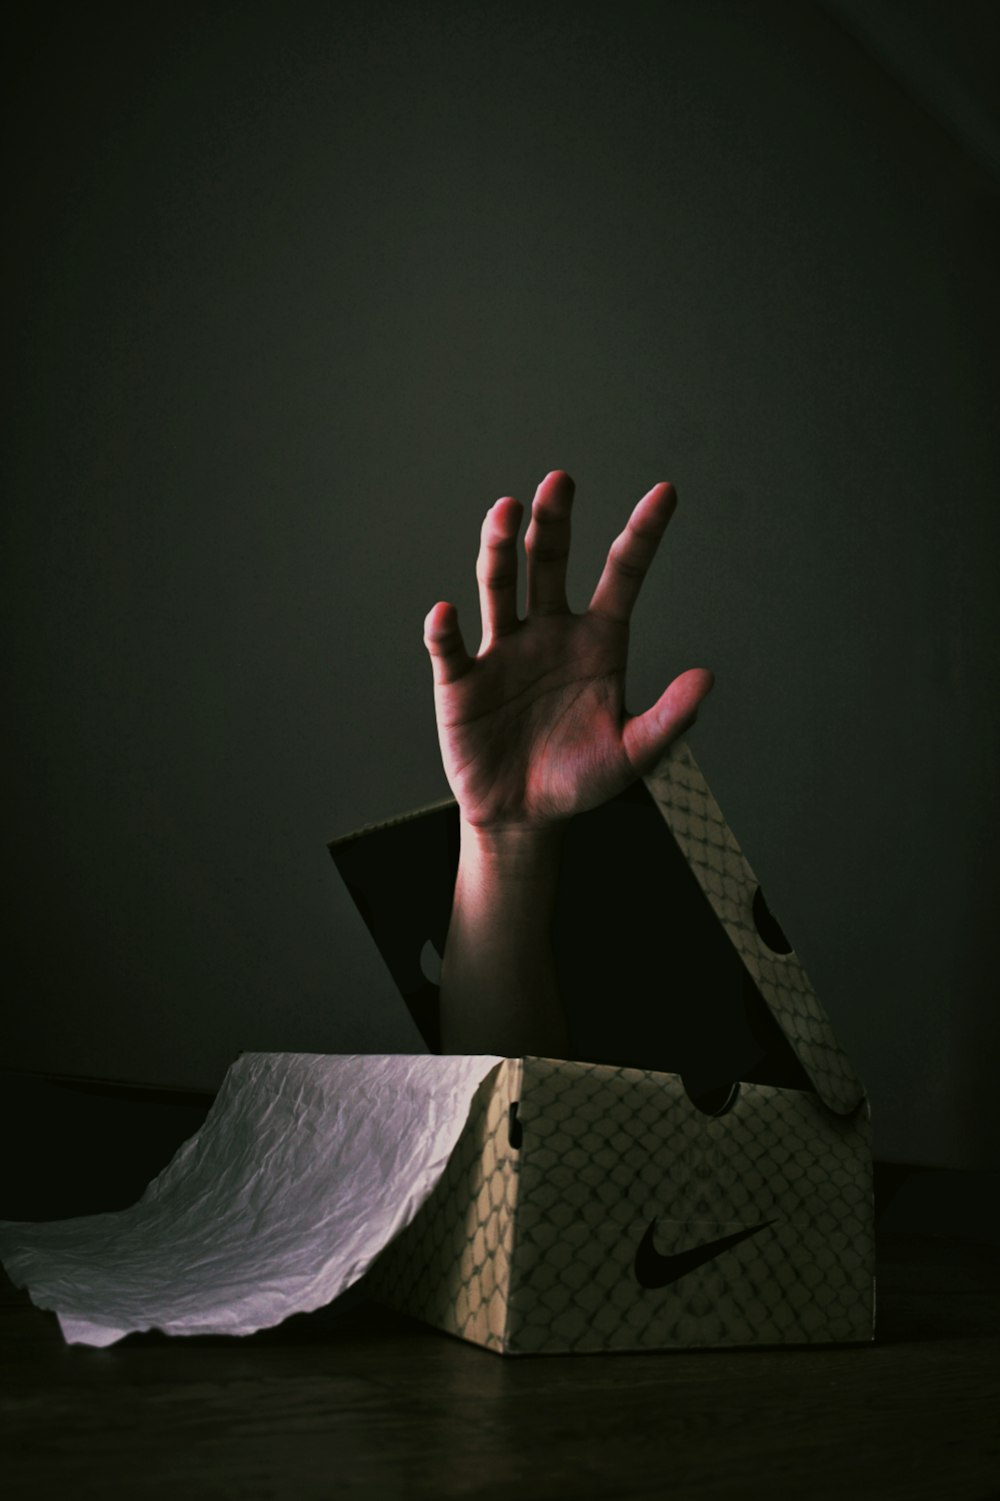 human hand in shoe box